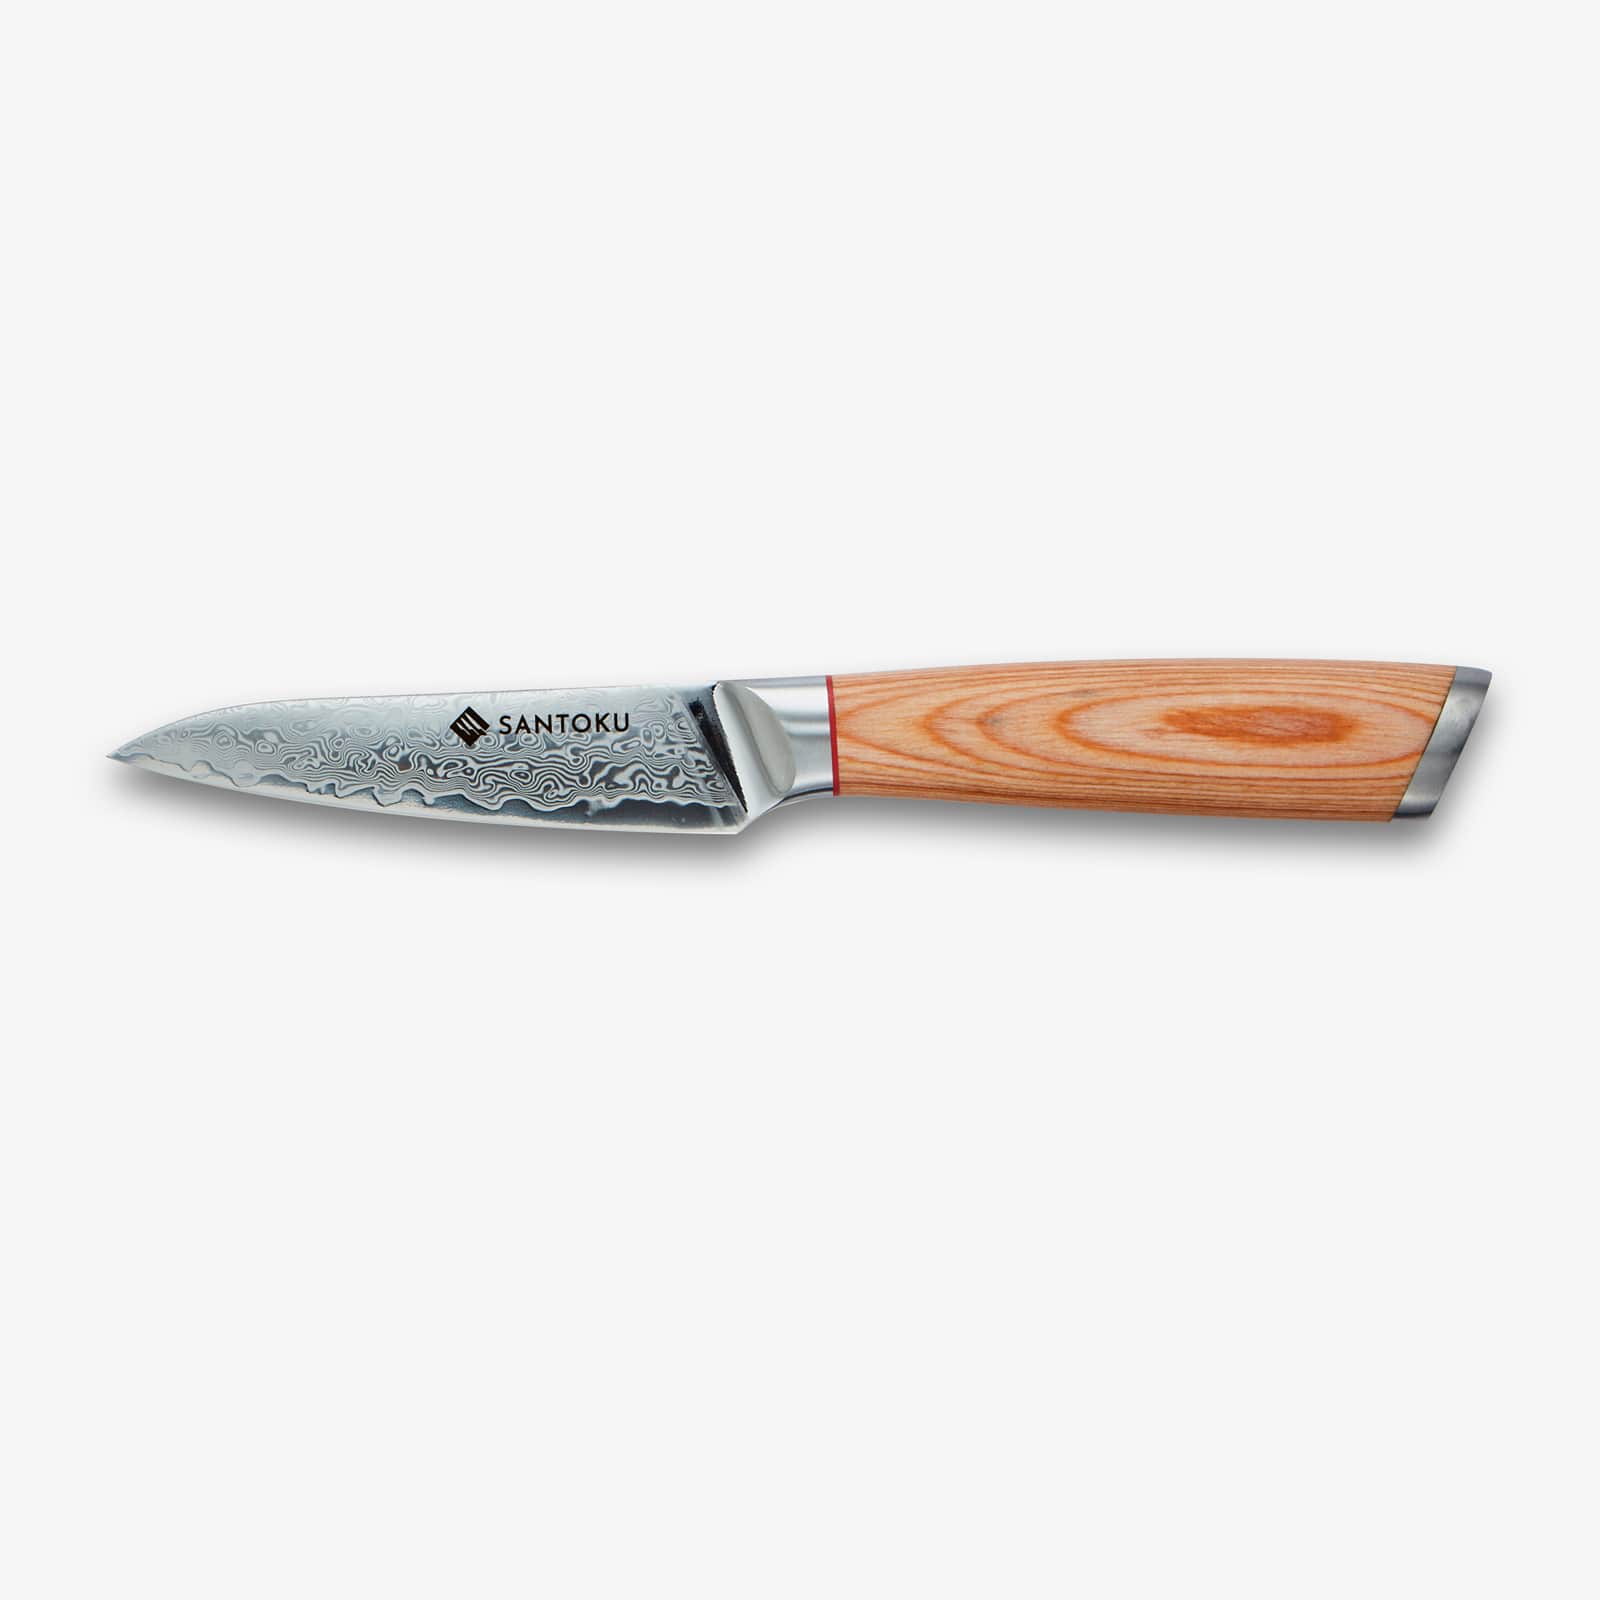 Haruta (はる た) 4 -дюймовый нож для палаты